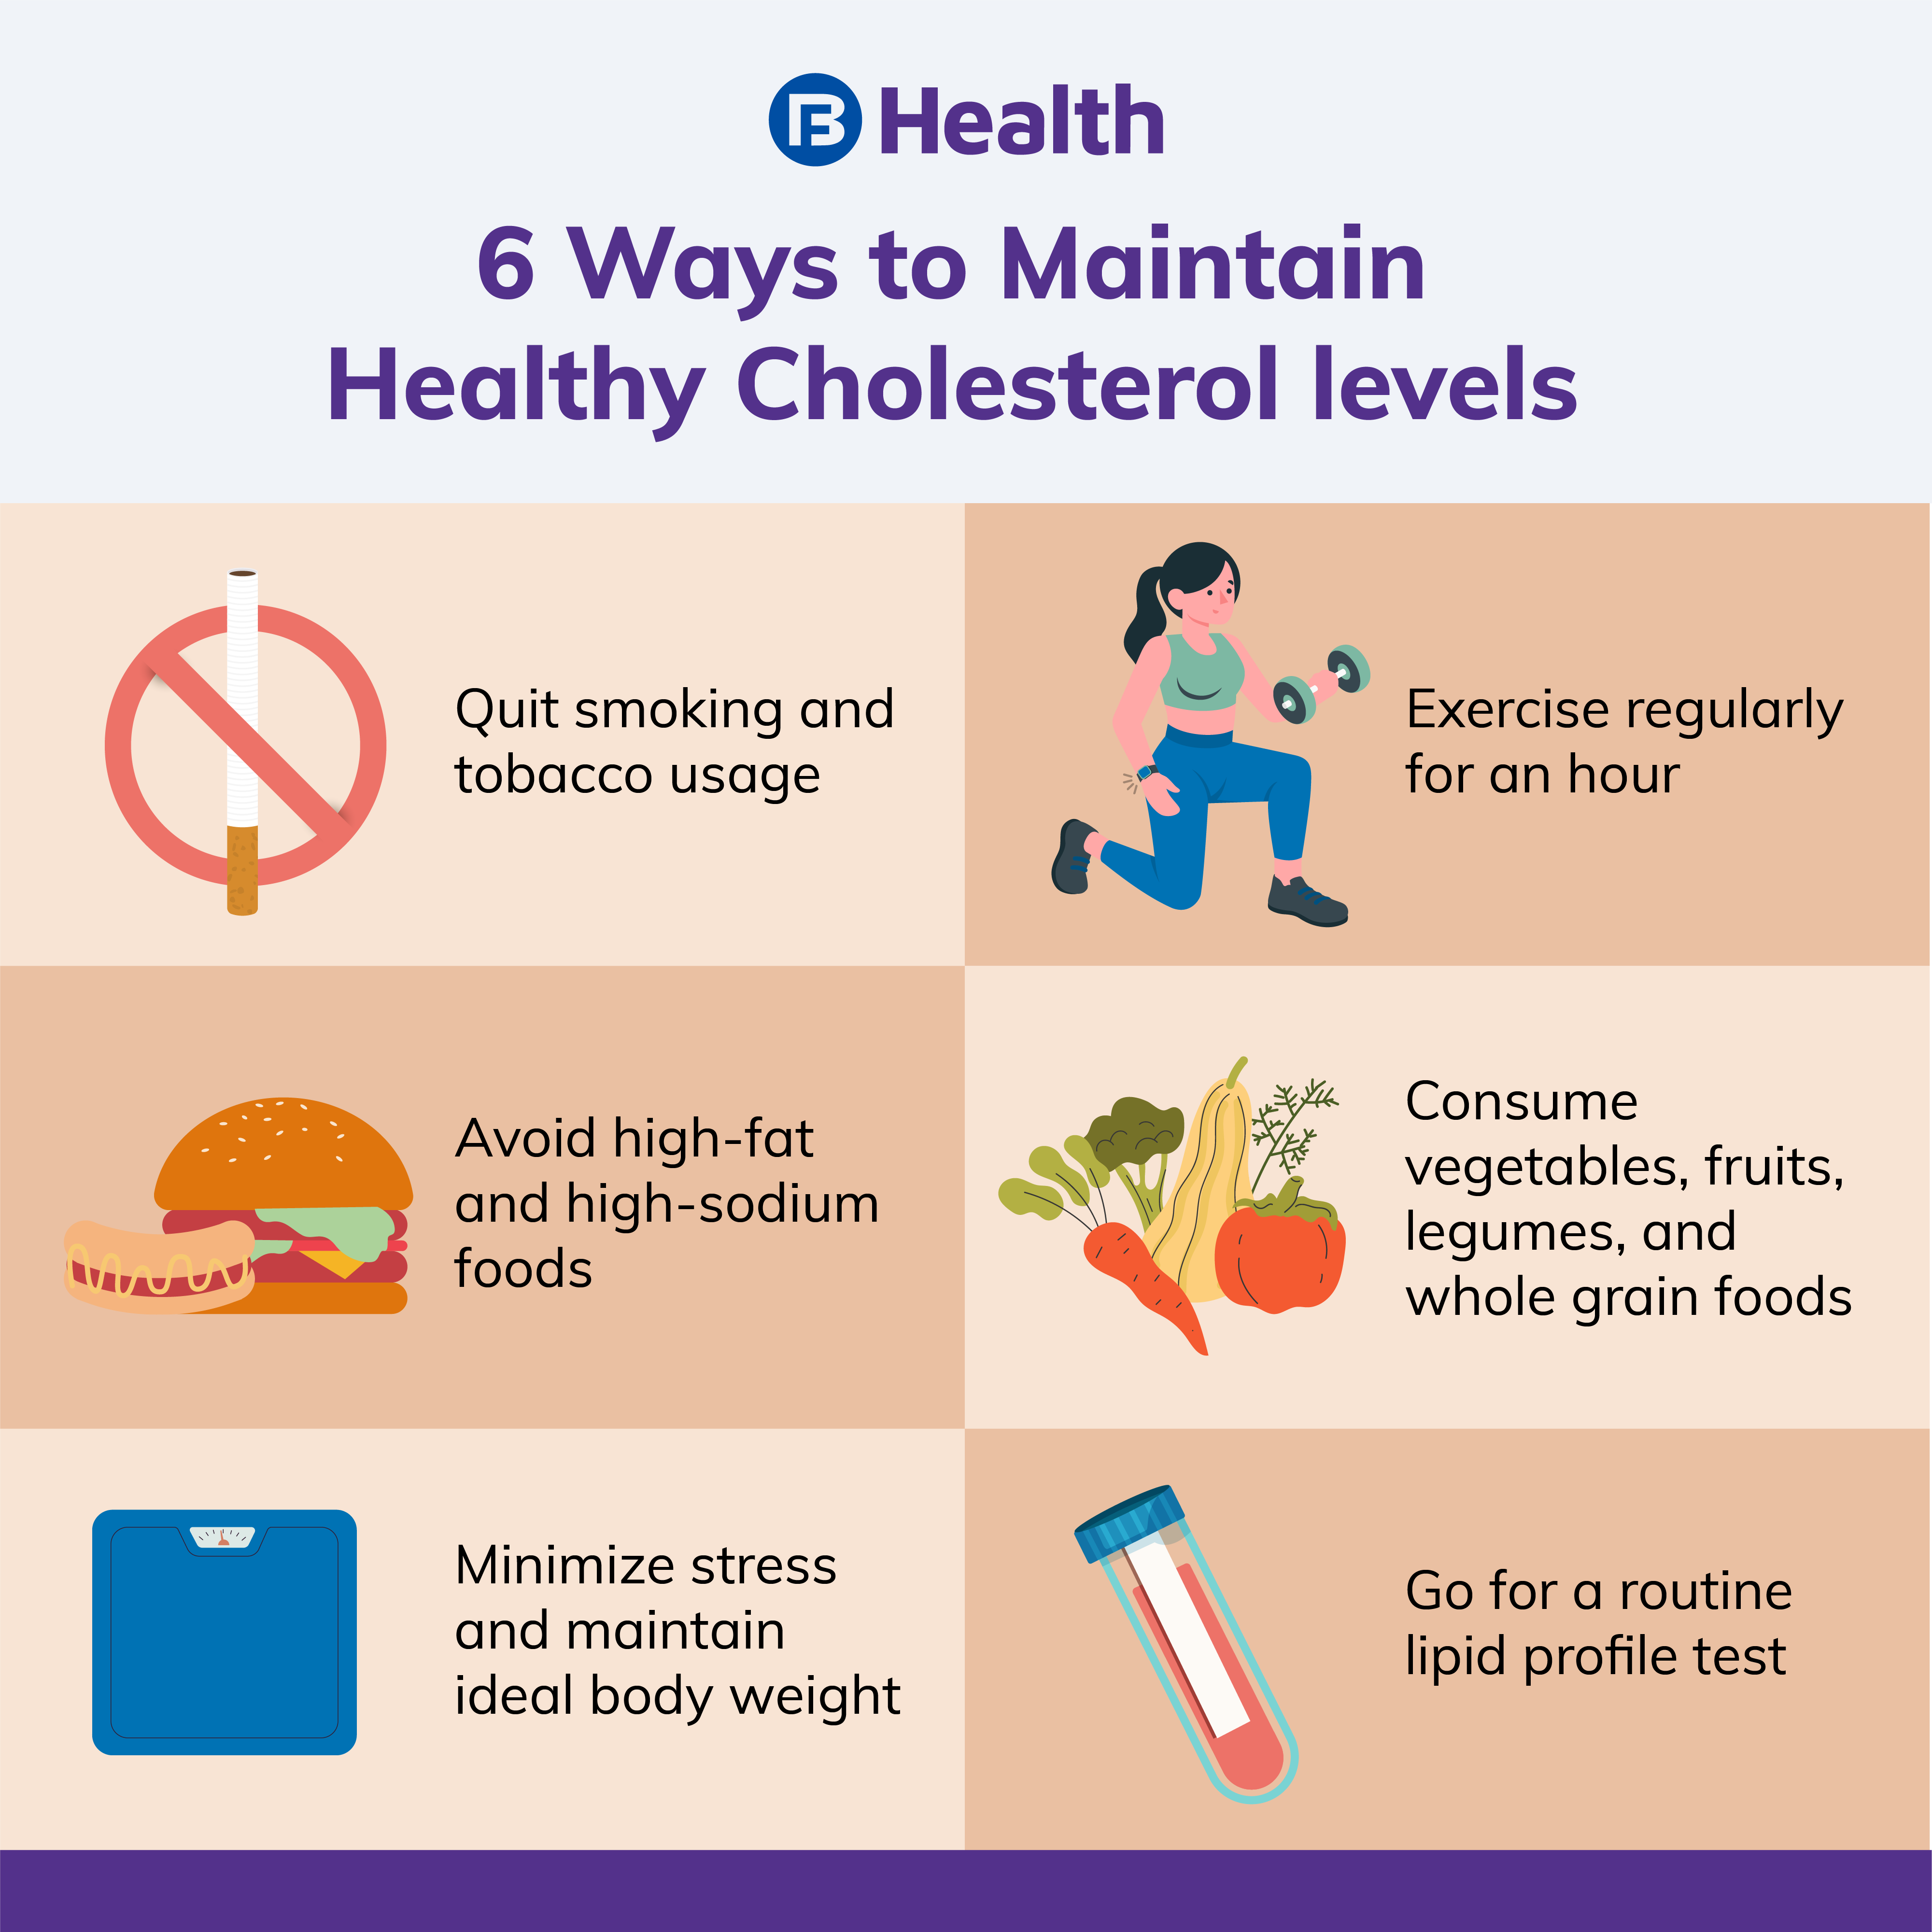 Maintaining healthy cholesterol profiles